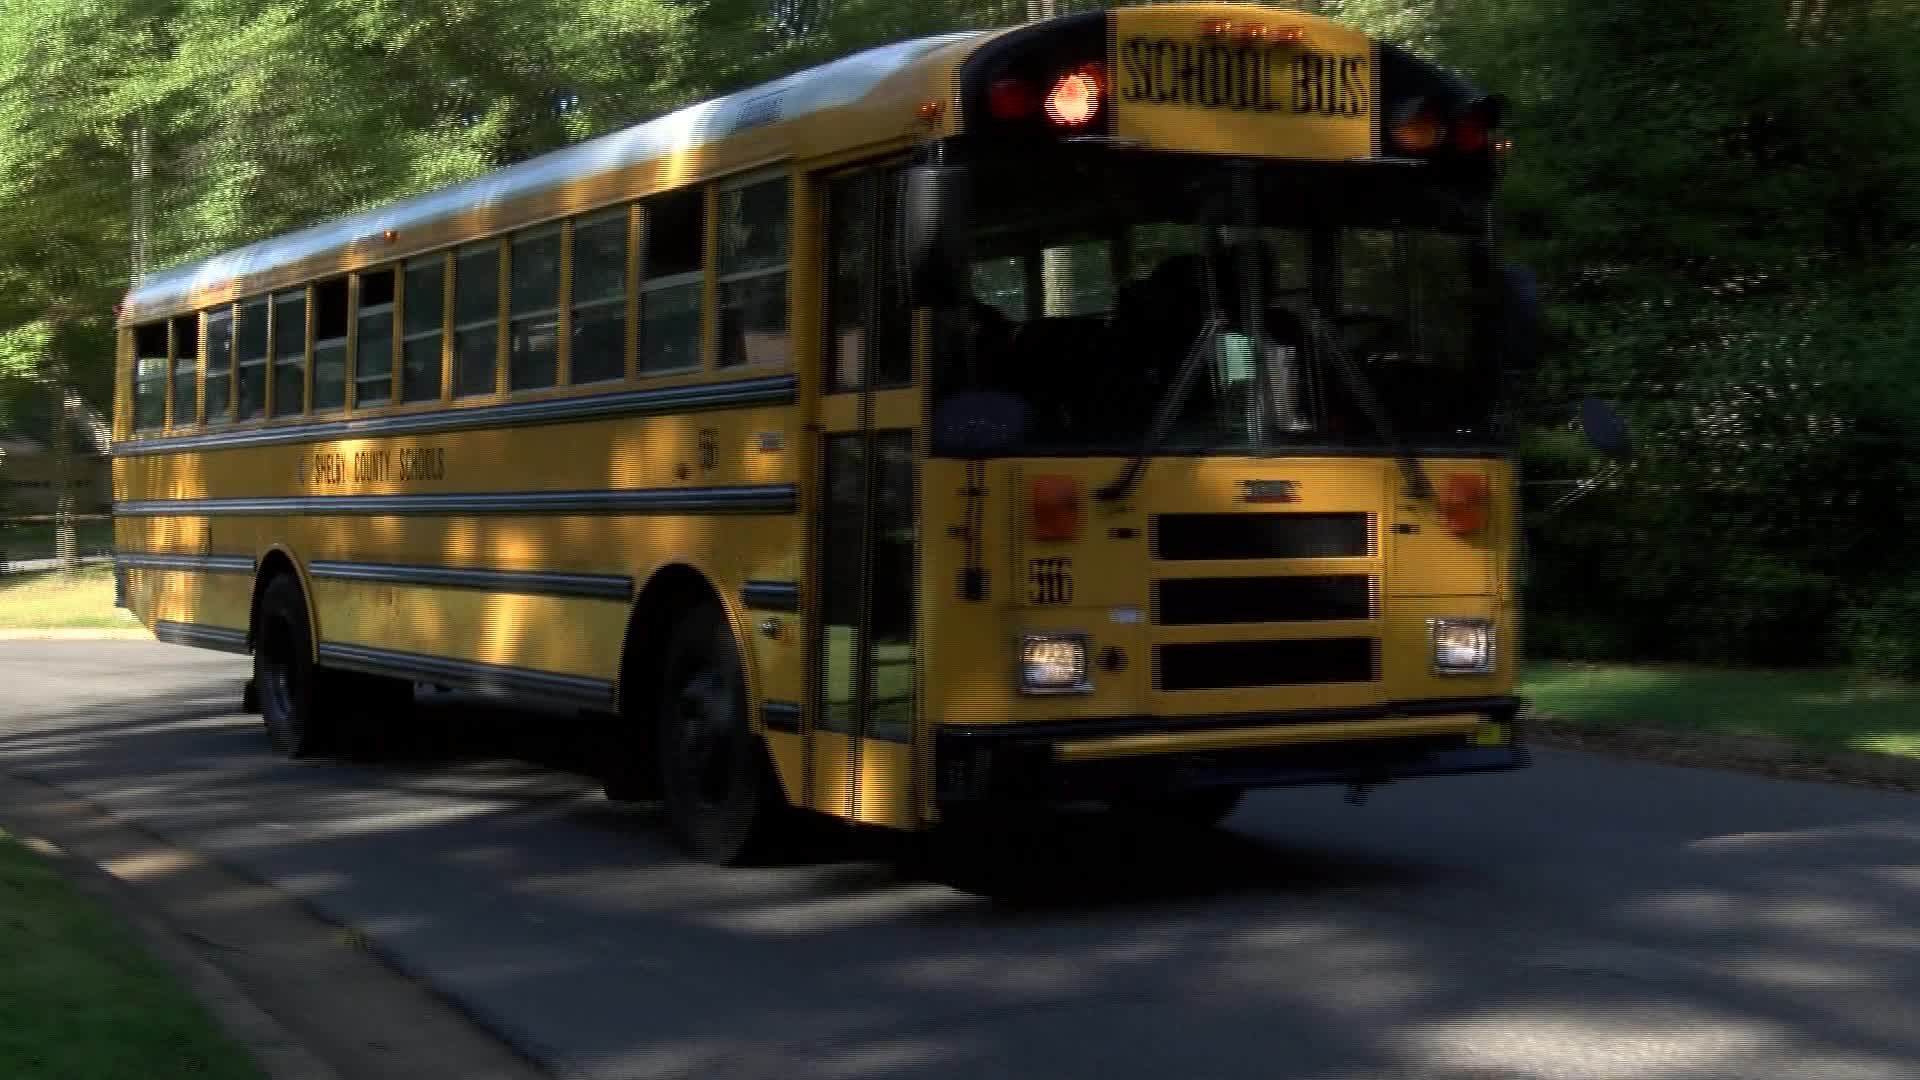 Sex offenders living near bus stops